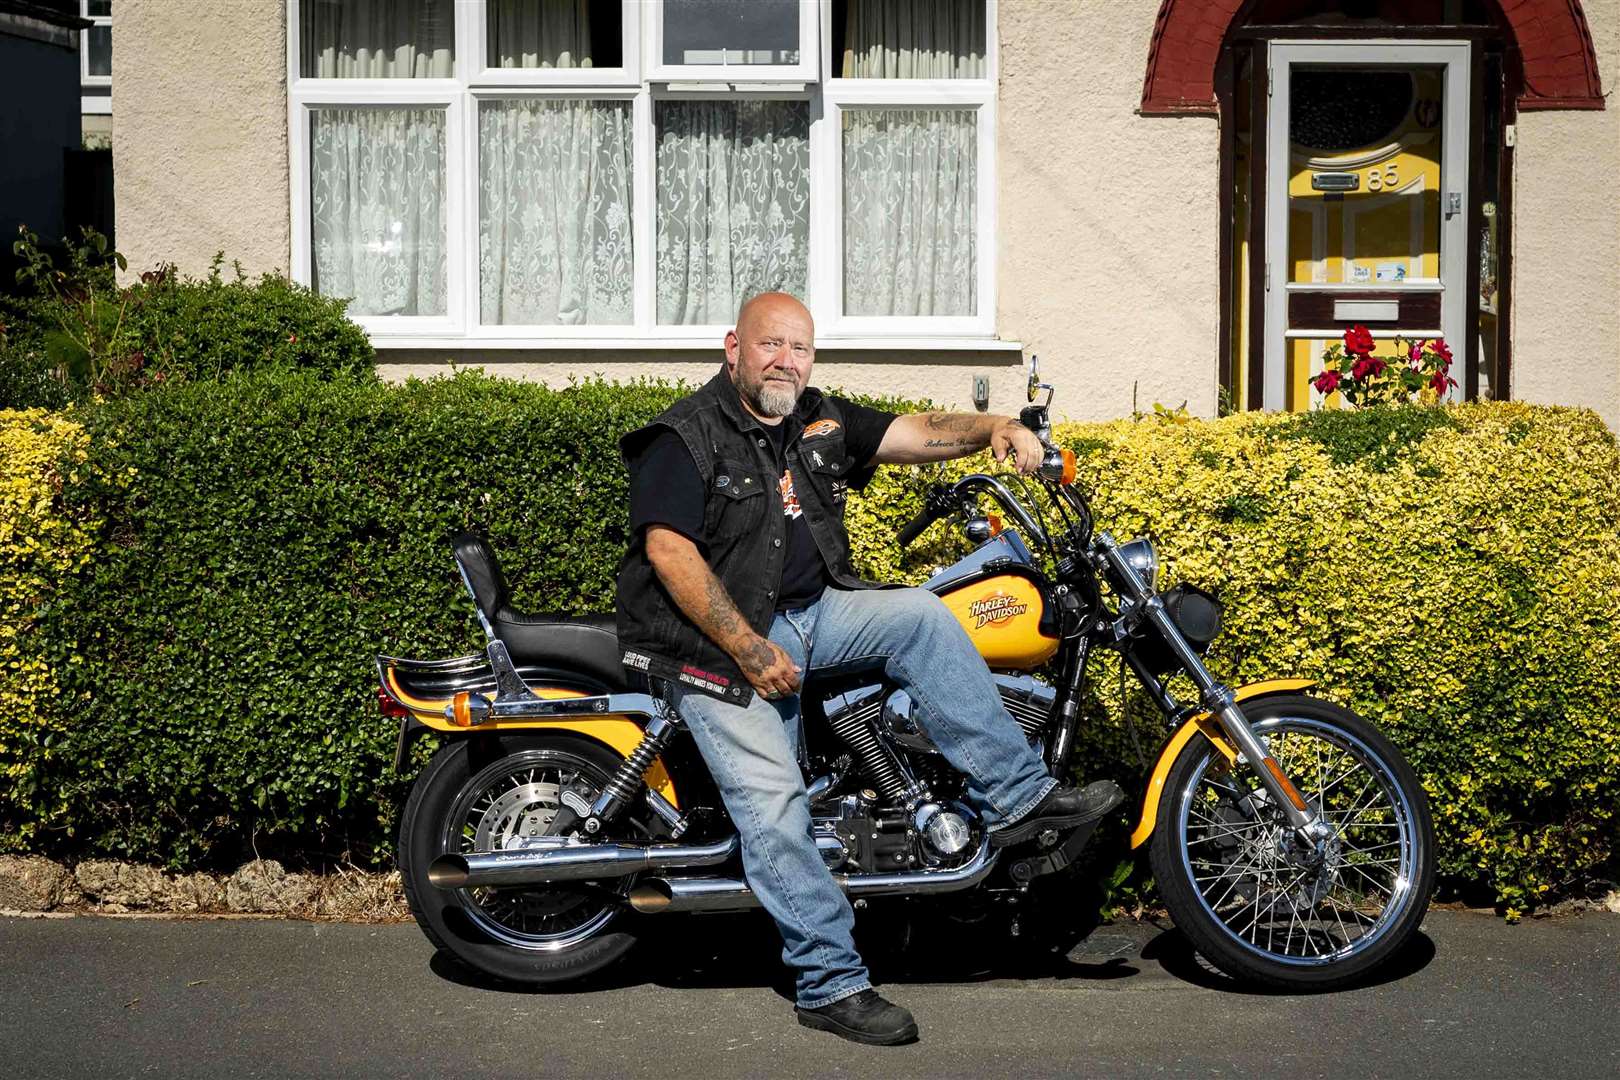 Trevor Manlow with his 2000 Harley Davidson Dyna Wide Glide (Jordan Pettitt/PA)